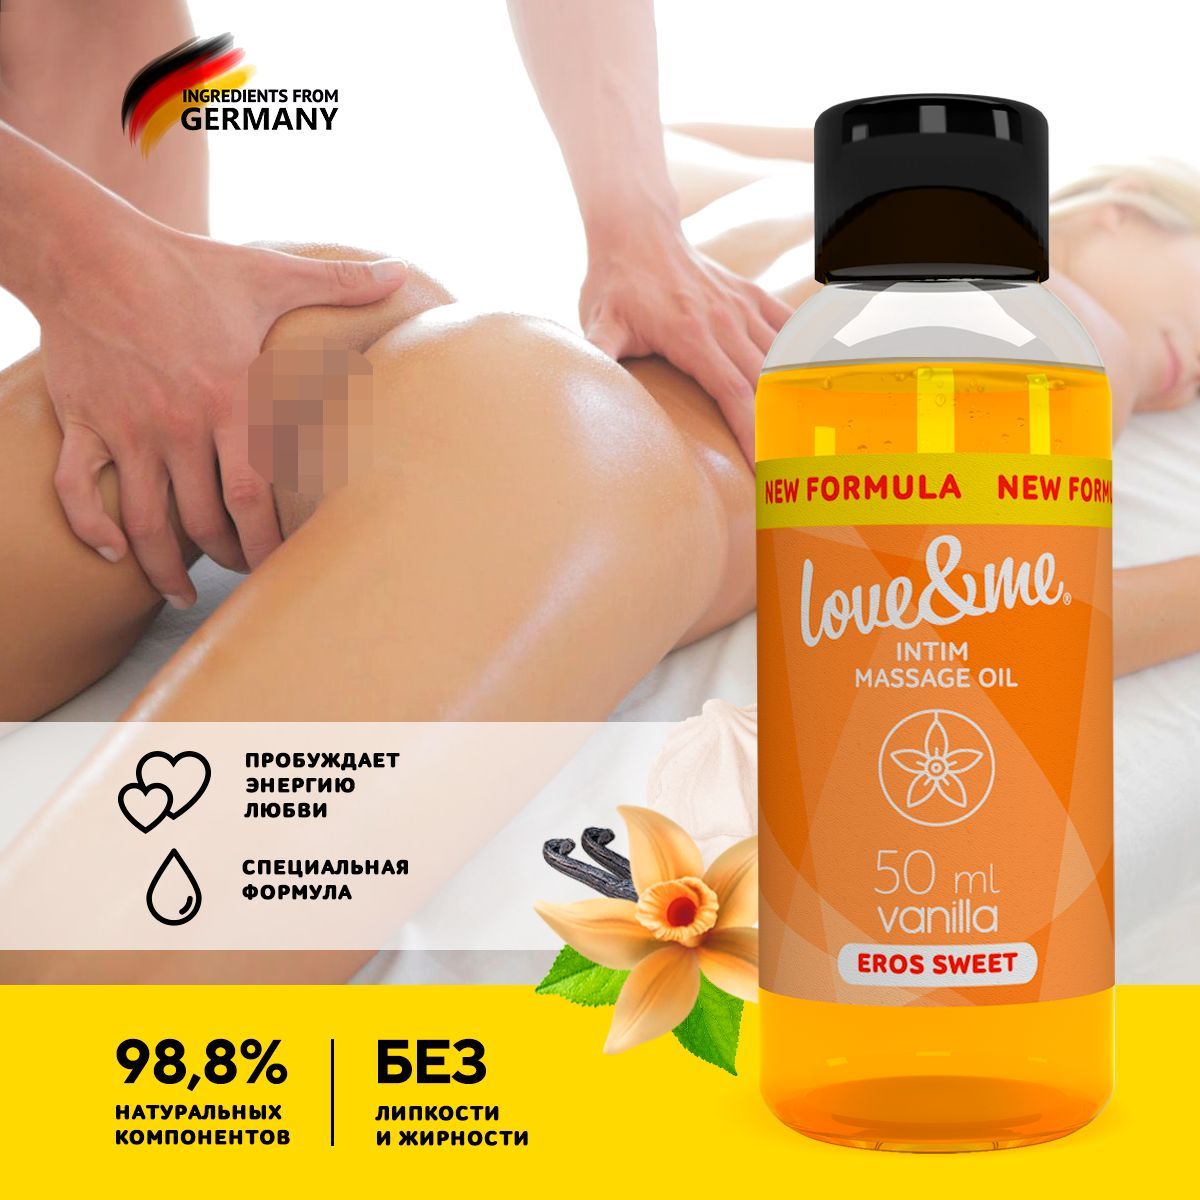 Oil for Erotic Massage